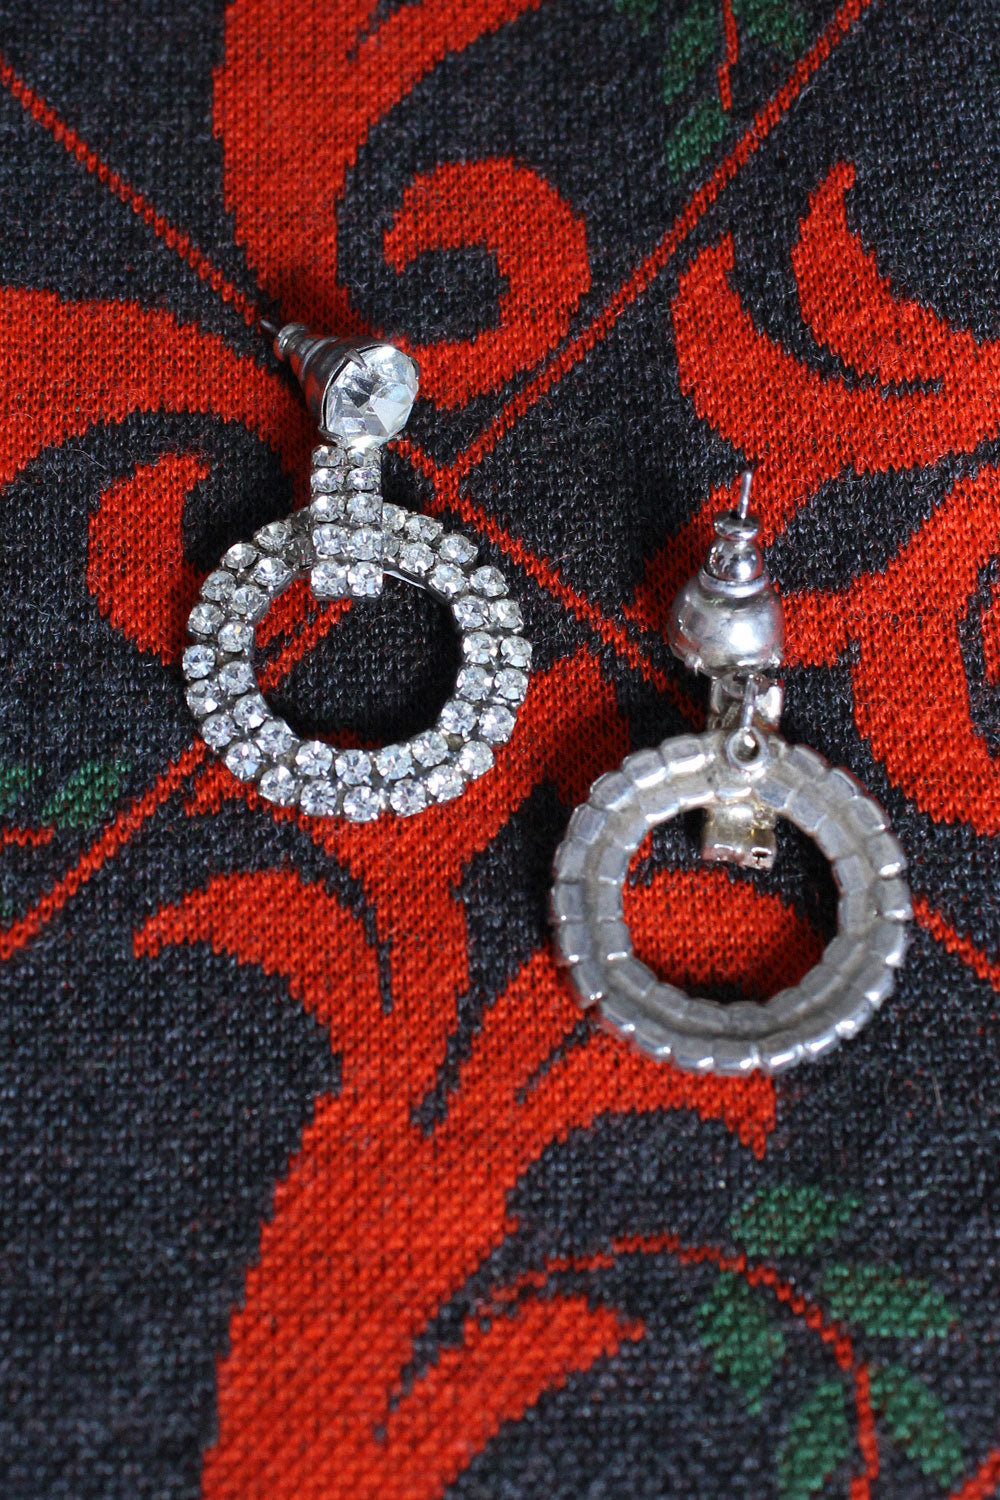 Rhinestone Circle Earrings